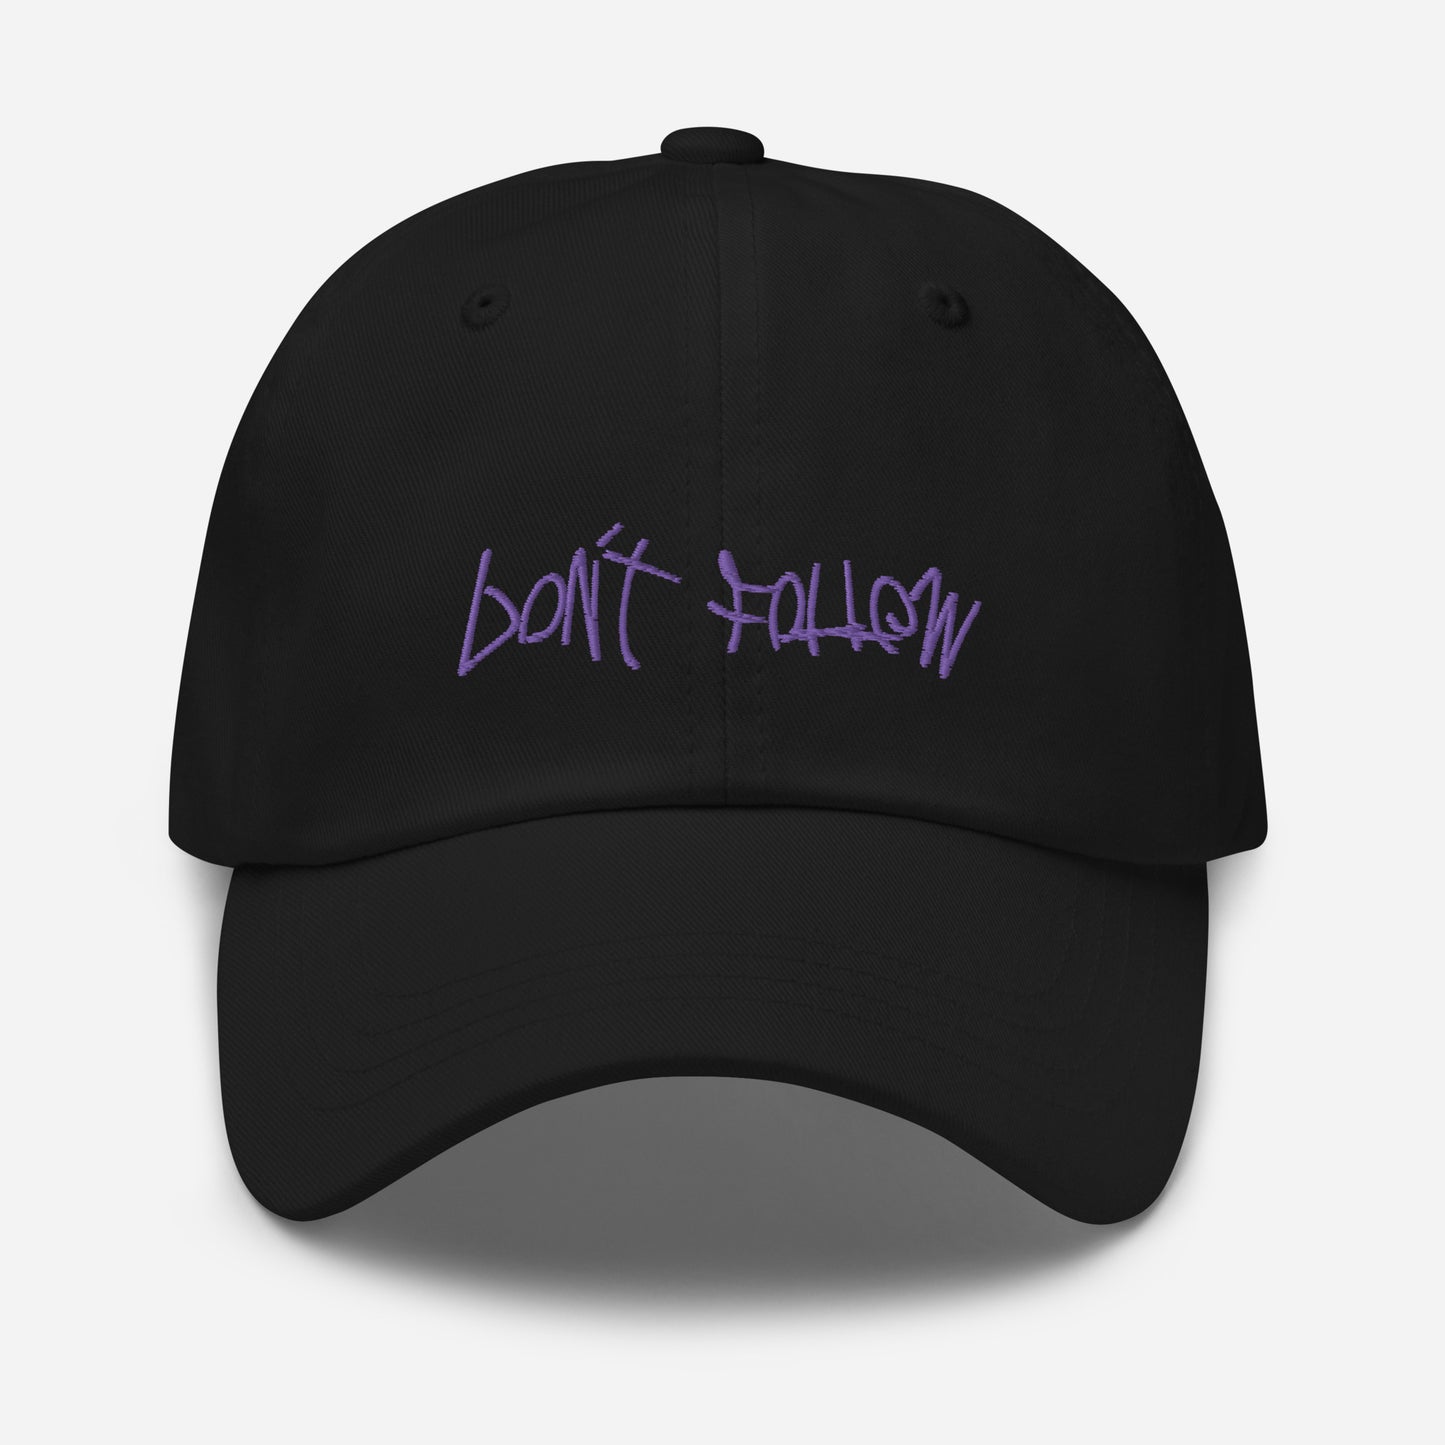 "Don't Follow" Hat